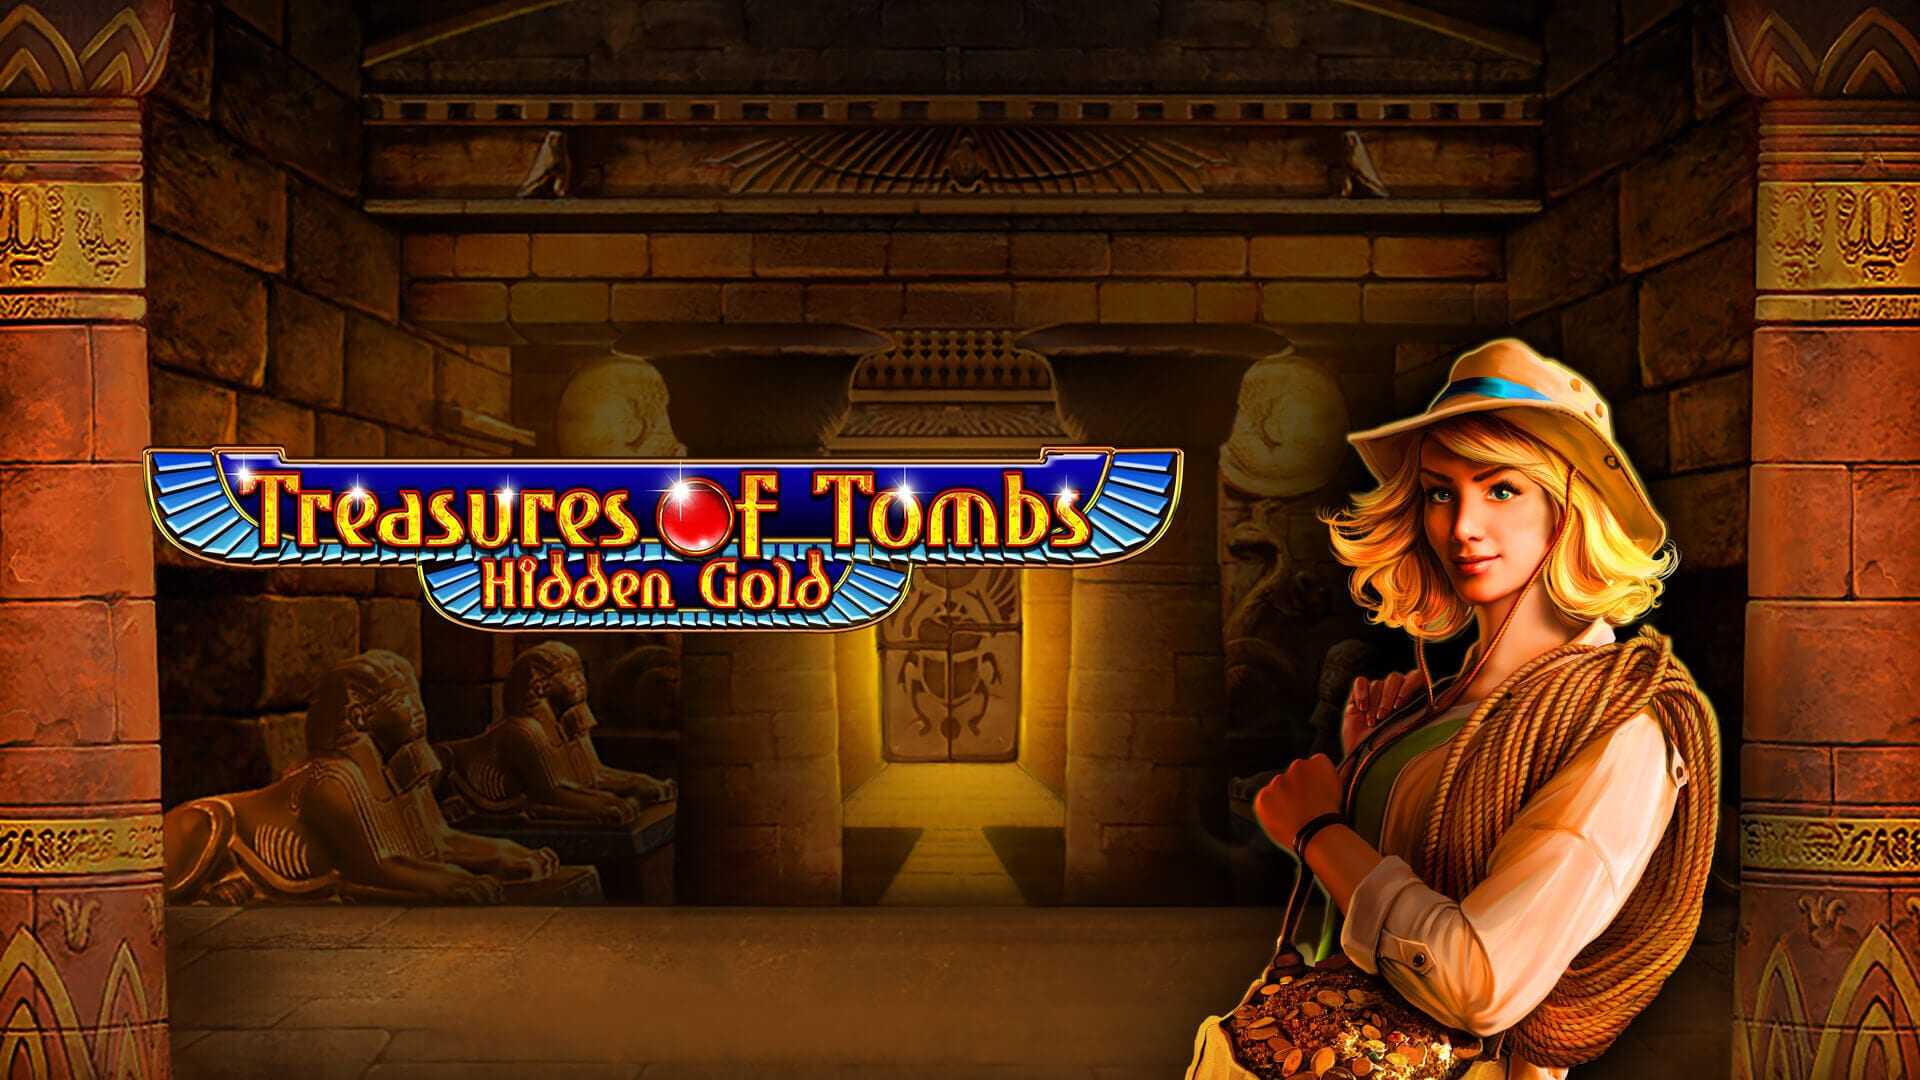 Treasure of Tombs main lady